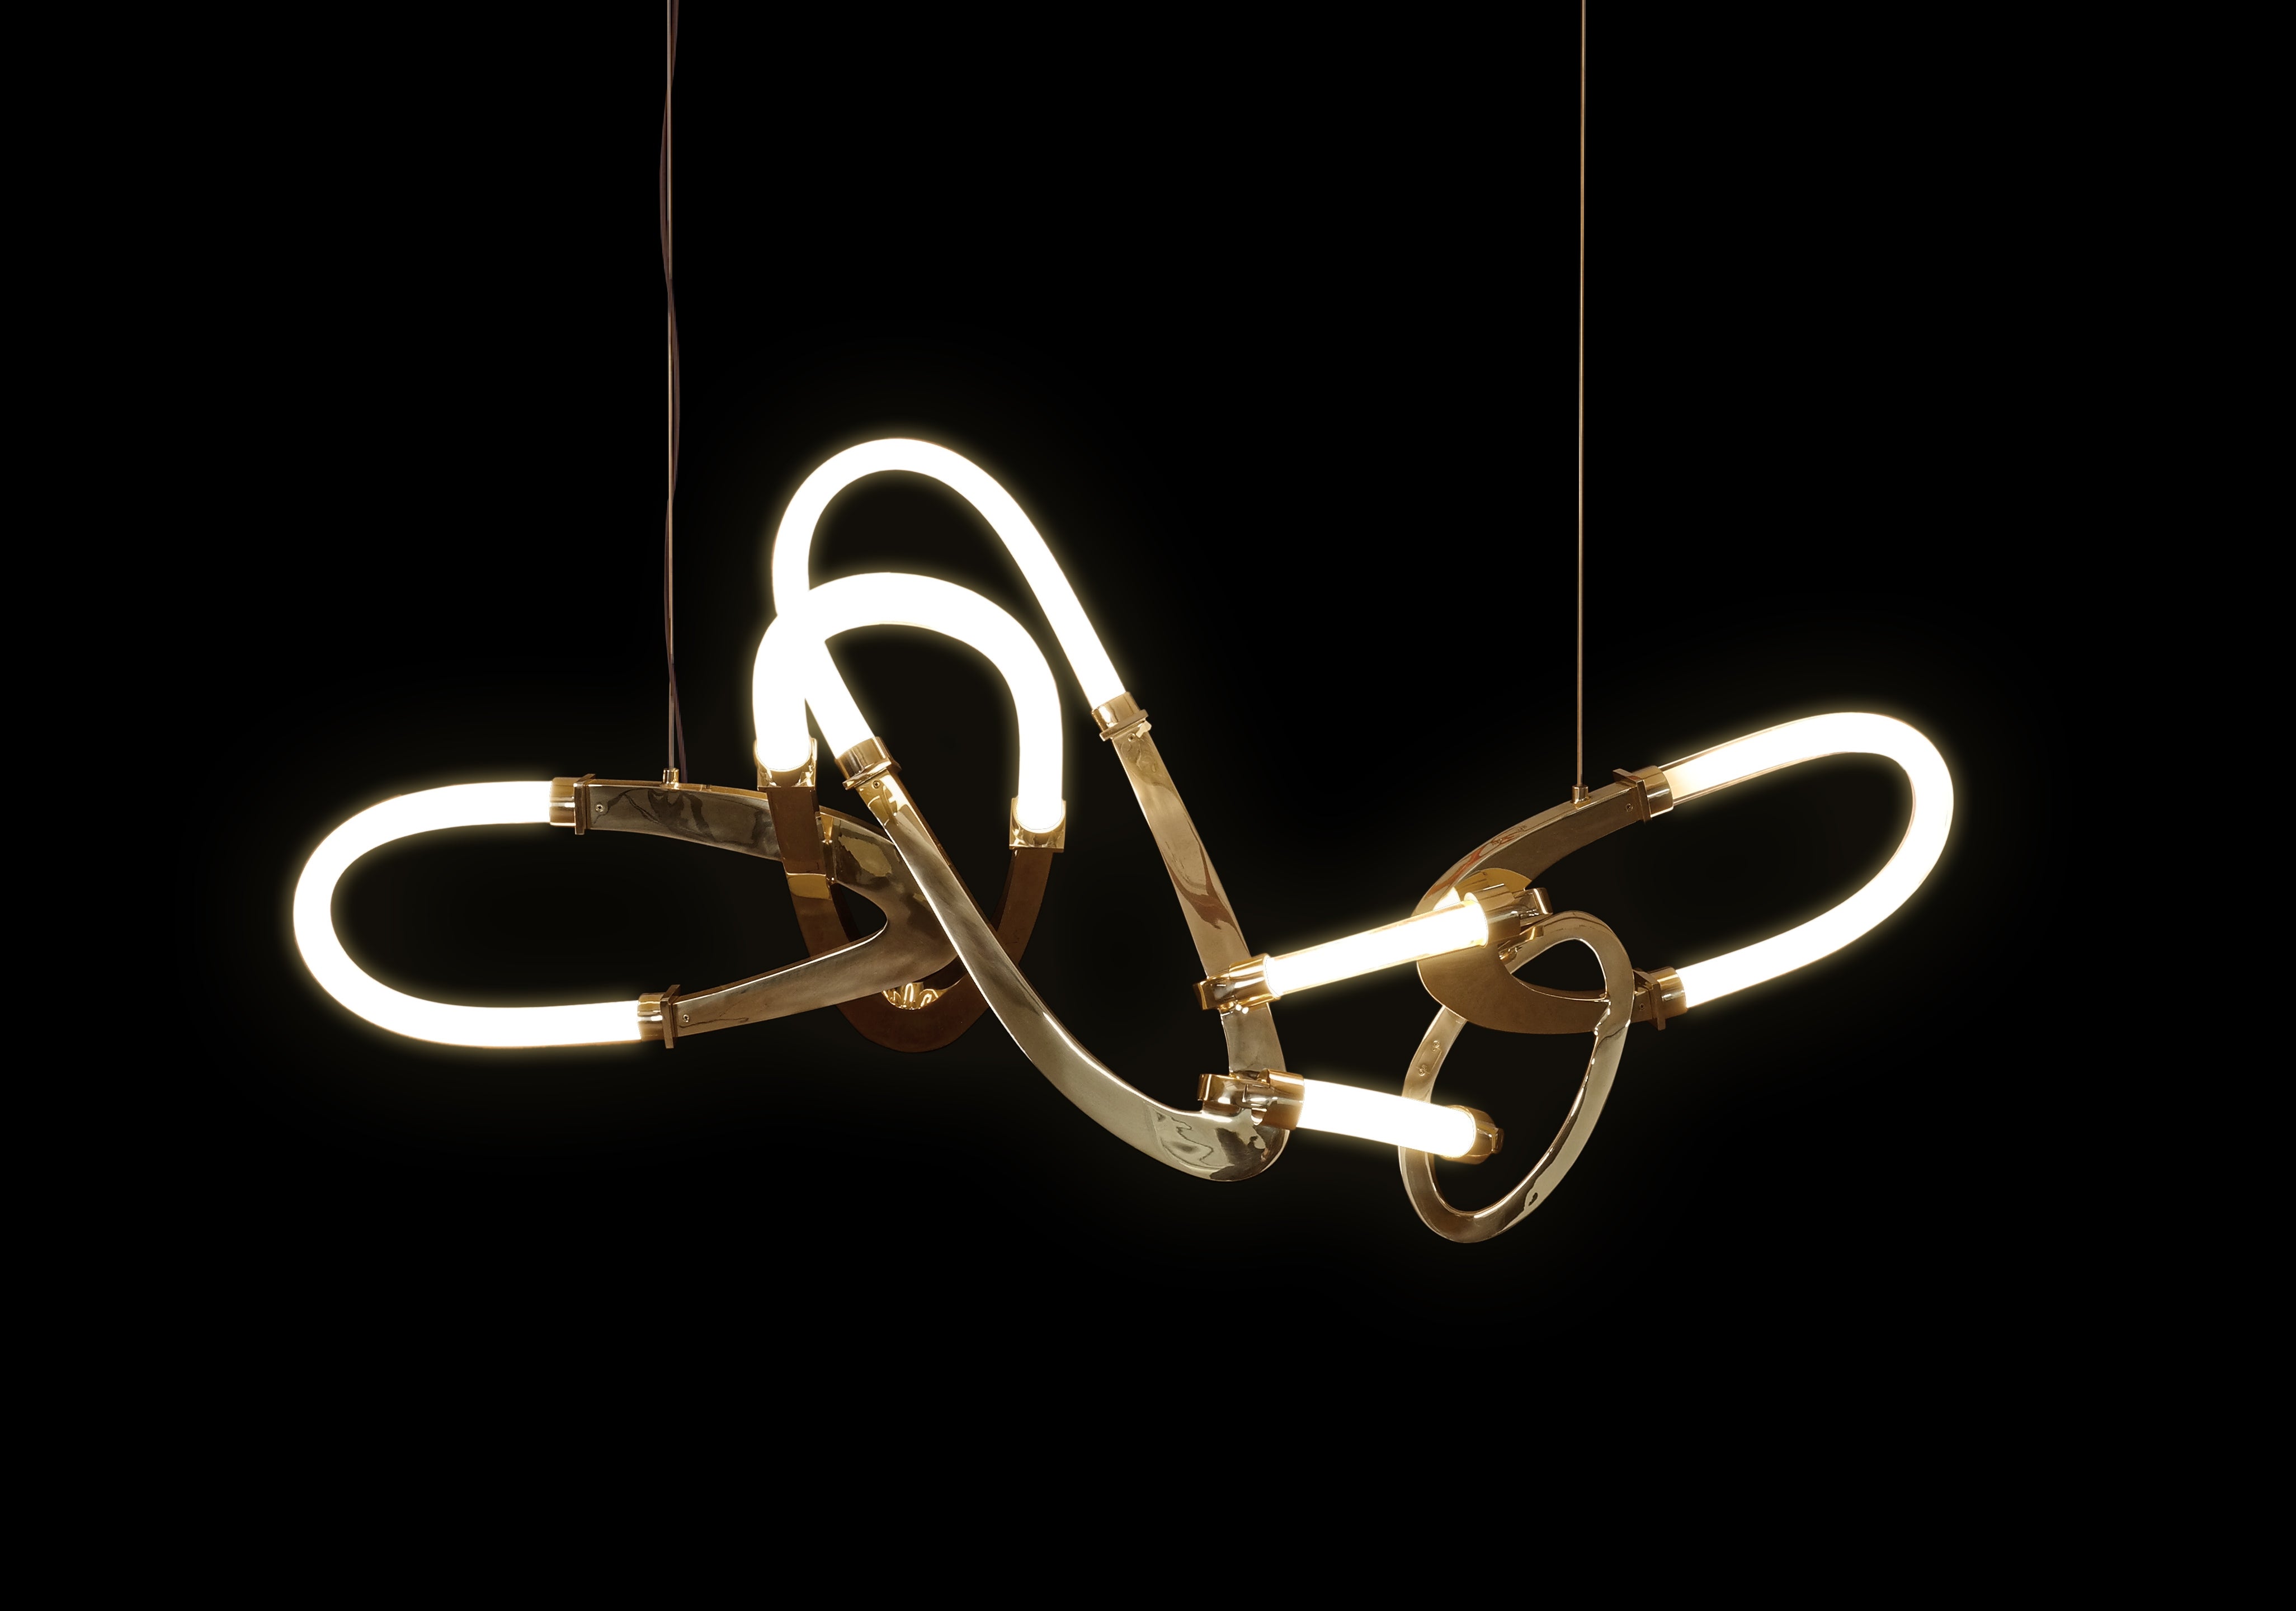 Bouchon Chandelier: Interlocked Circular Sculptural Elements of Bronze and Glass